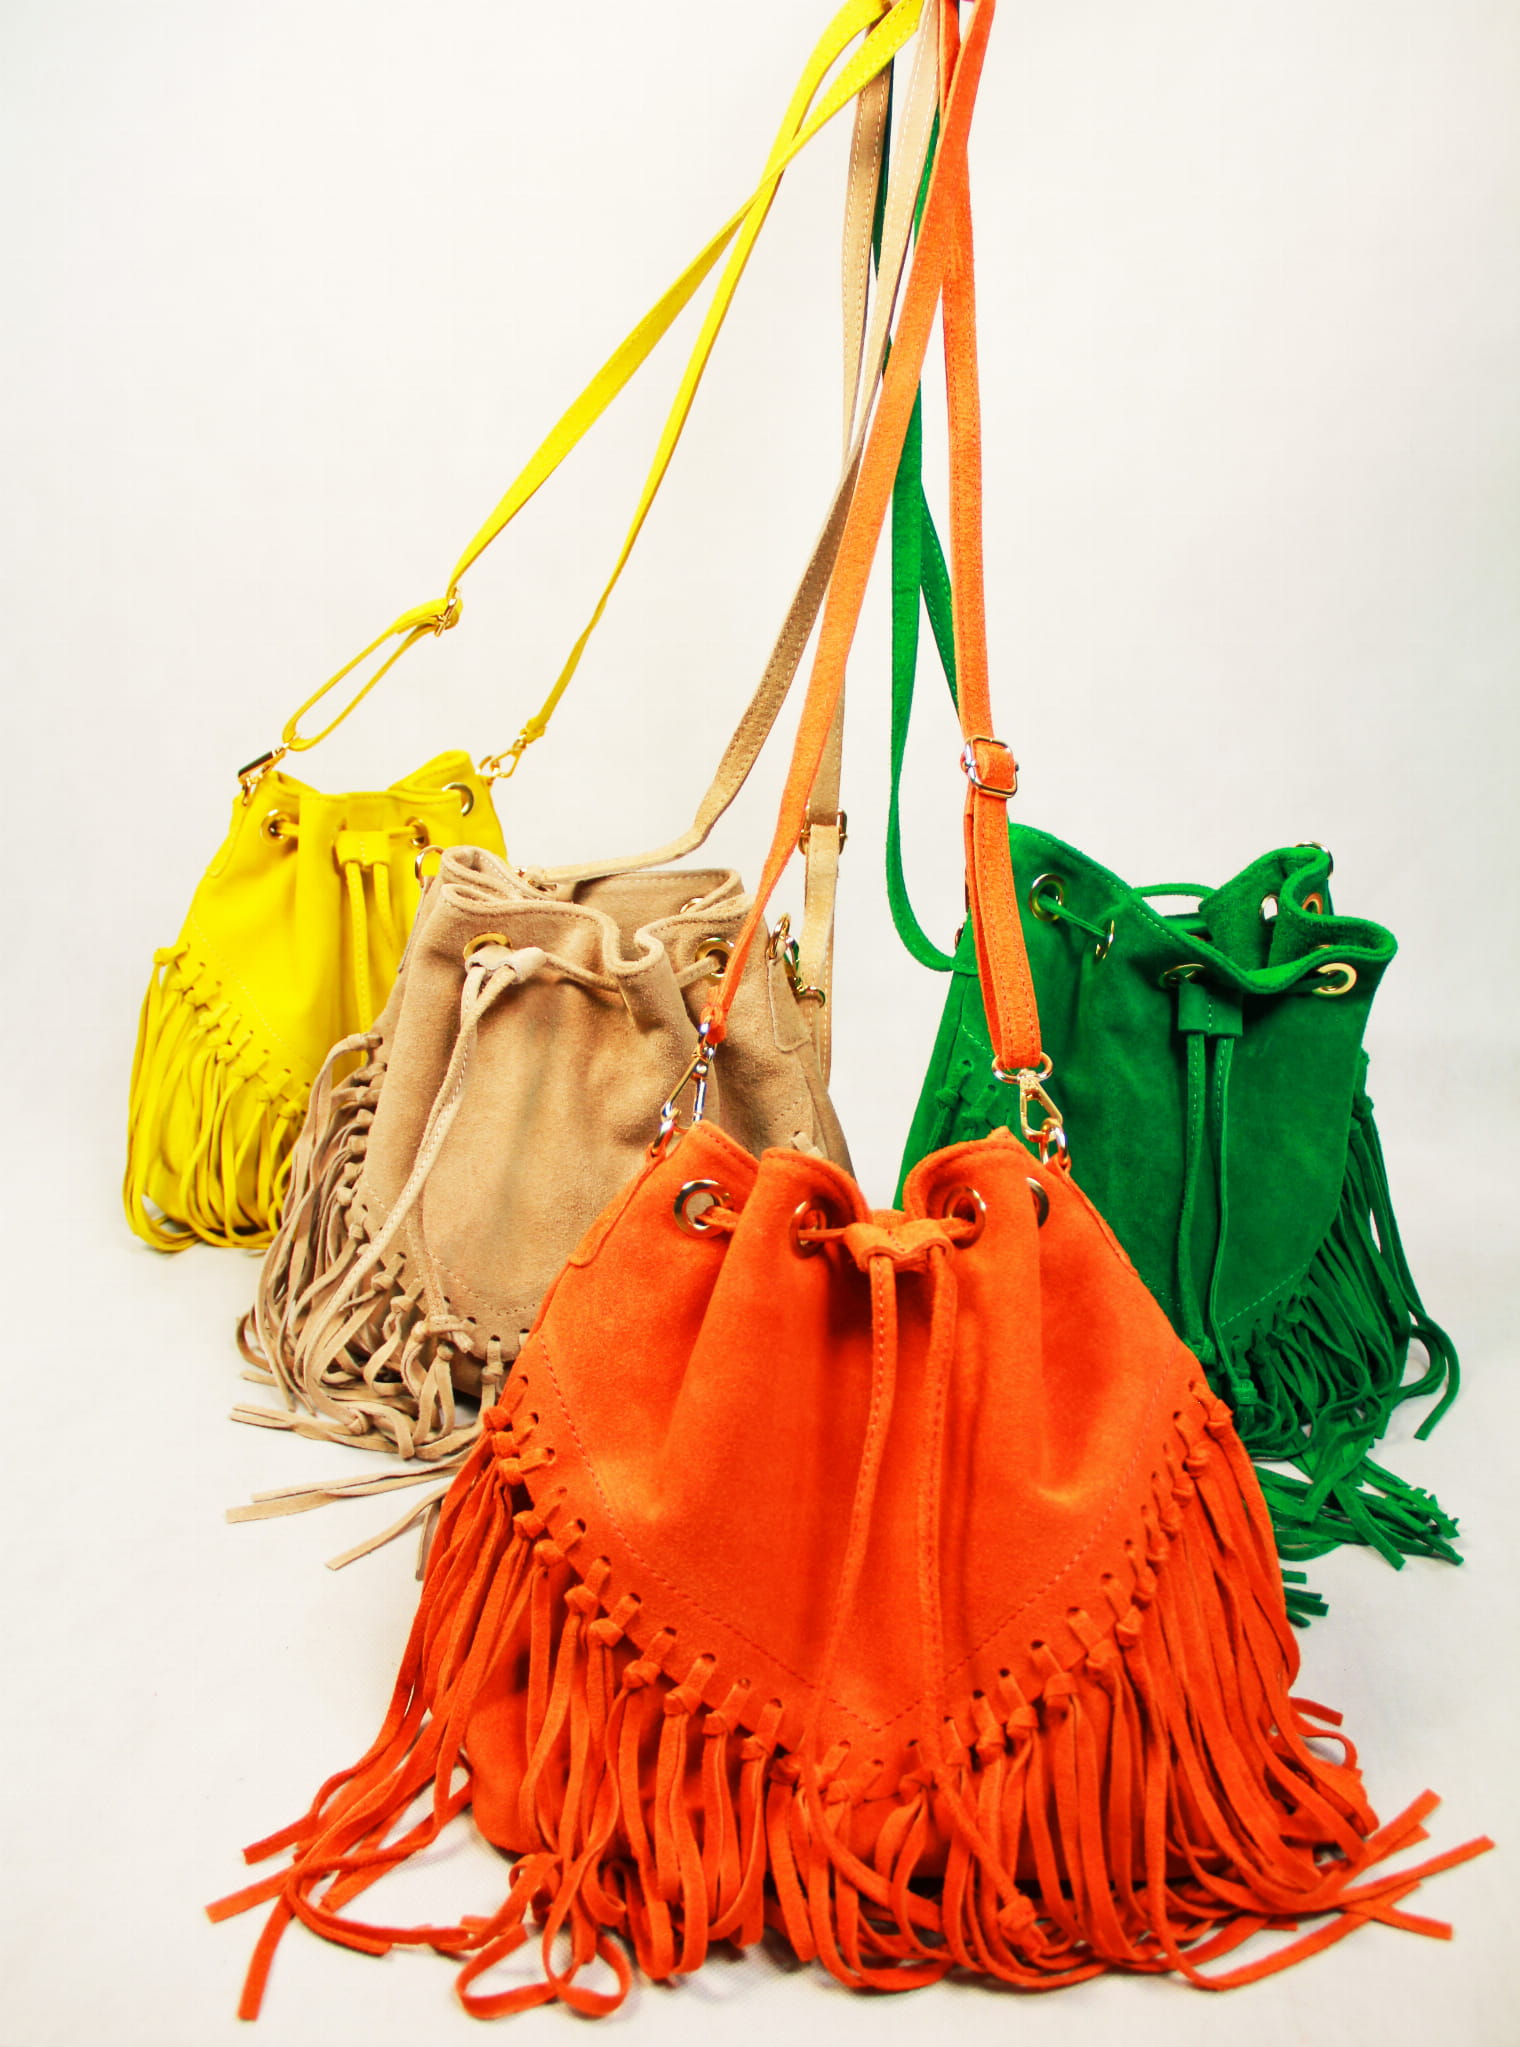 A messenger bag with tassels